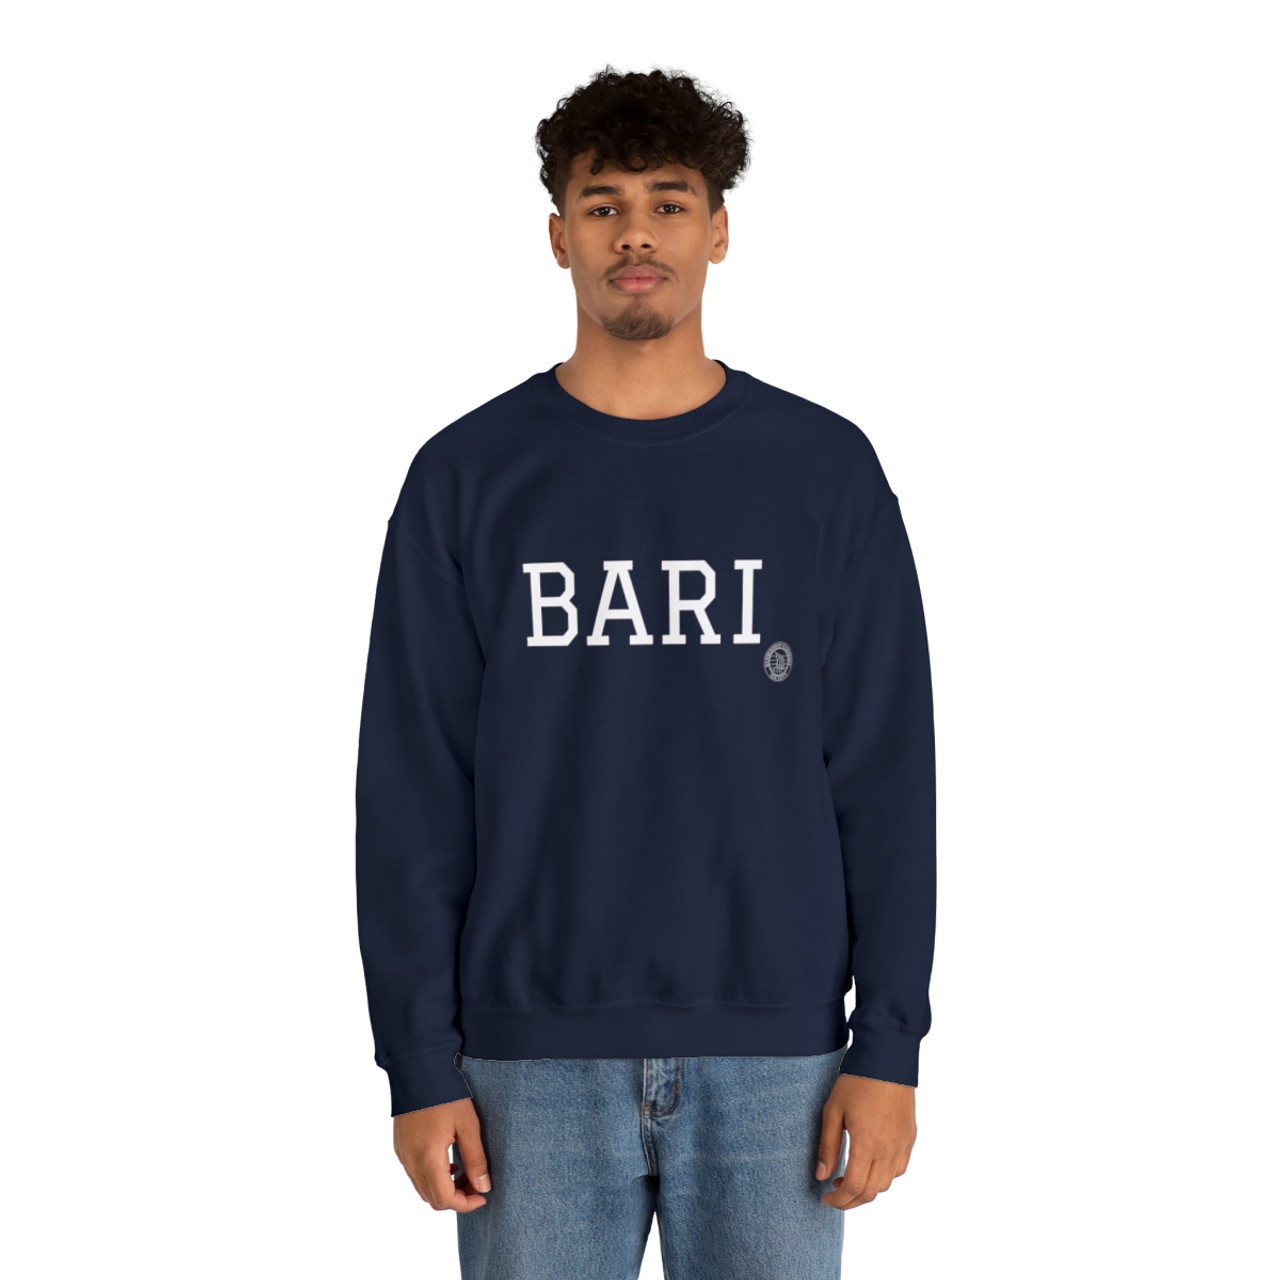 BARI Crewneck Sweatshirt- Multiple Colors